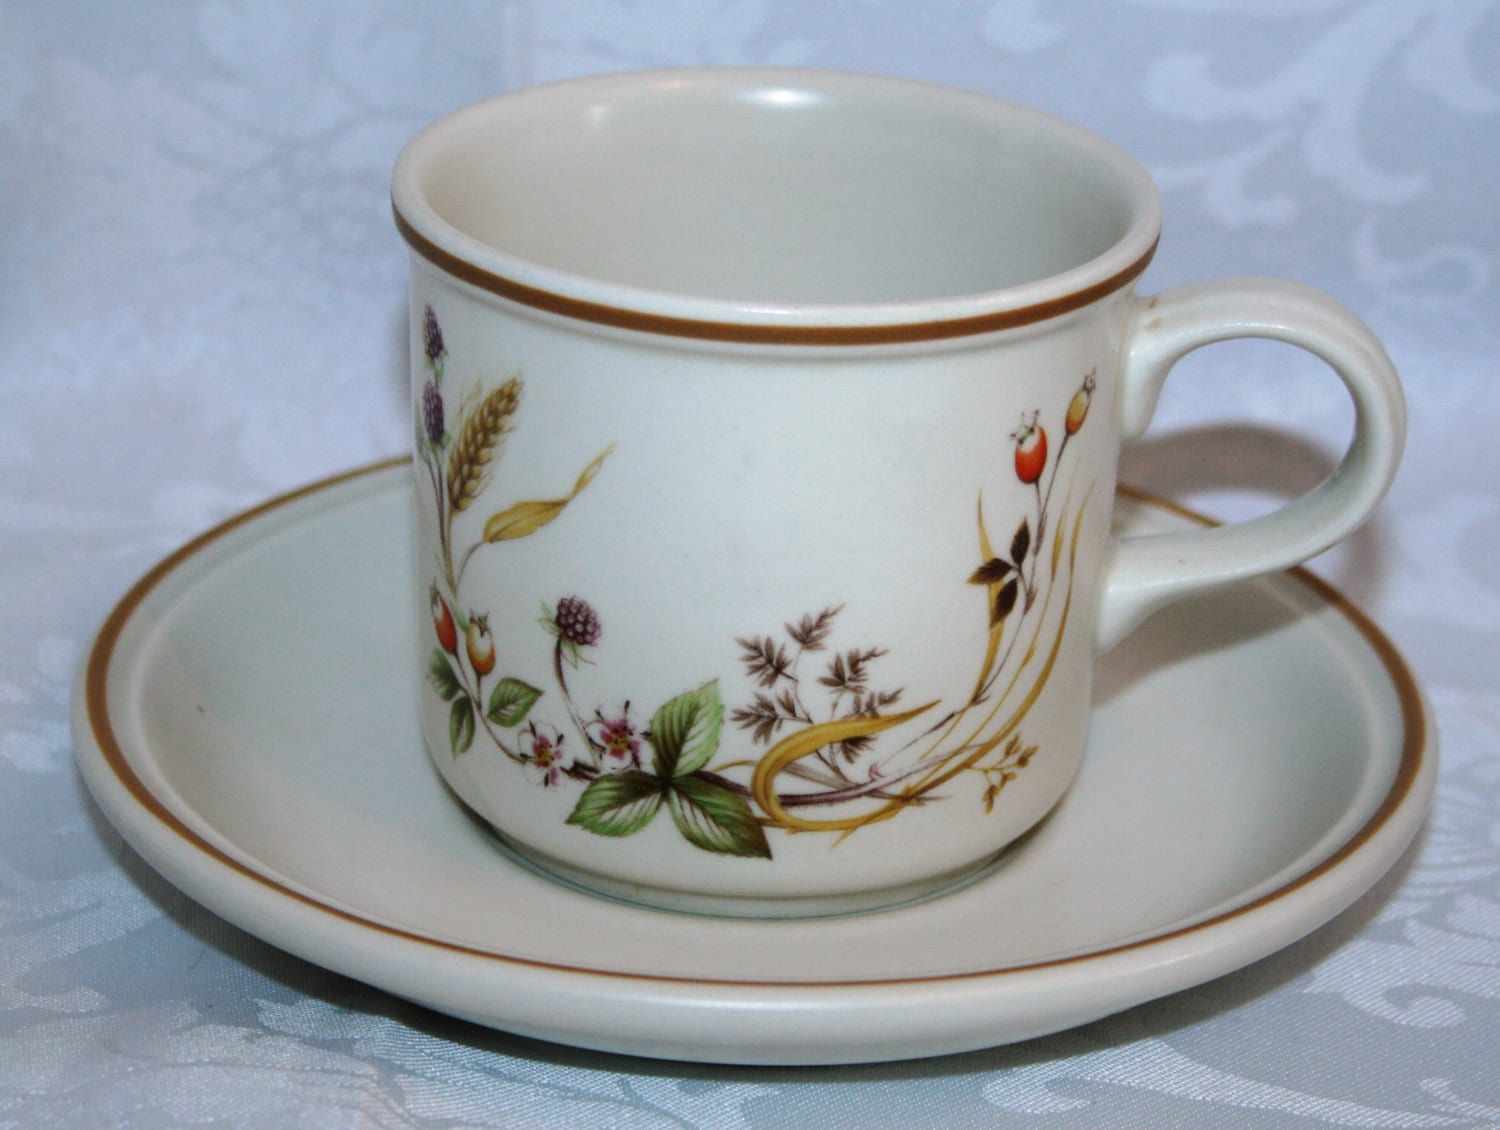 tea Cup Marks & by Vintage TraditionalTableware Tea cup vintage markings and Spencer Saucer